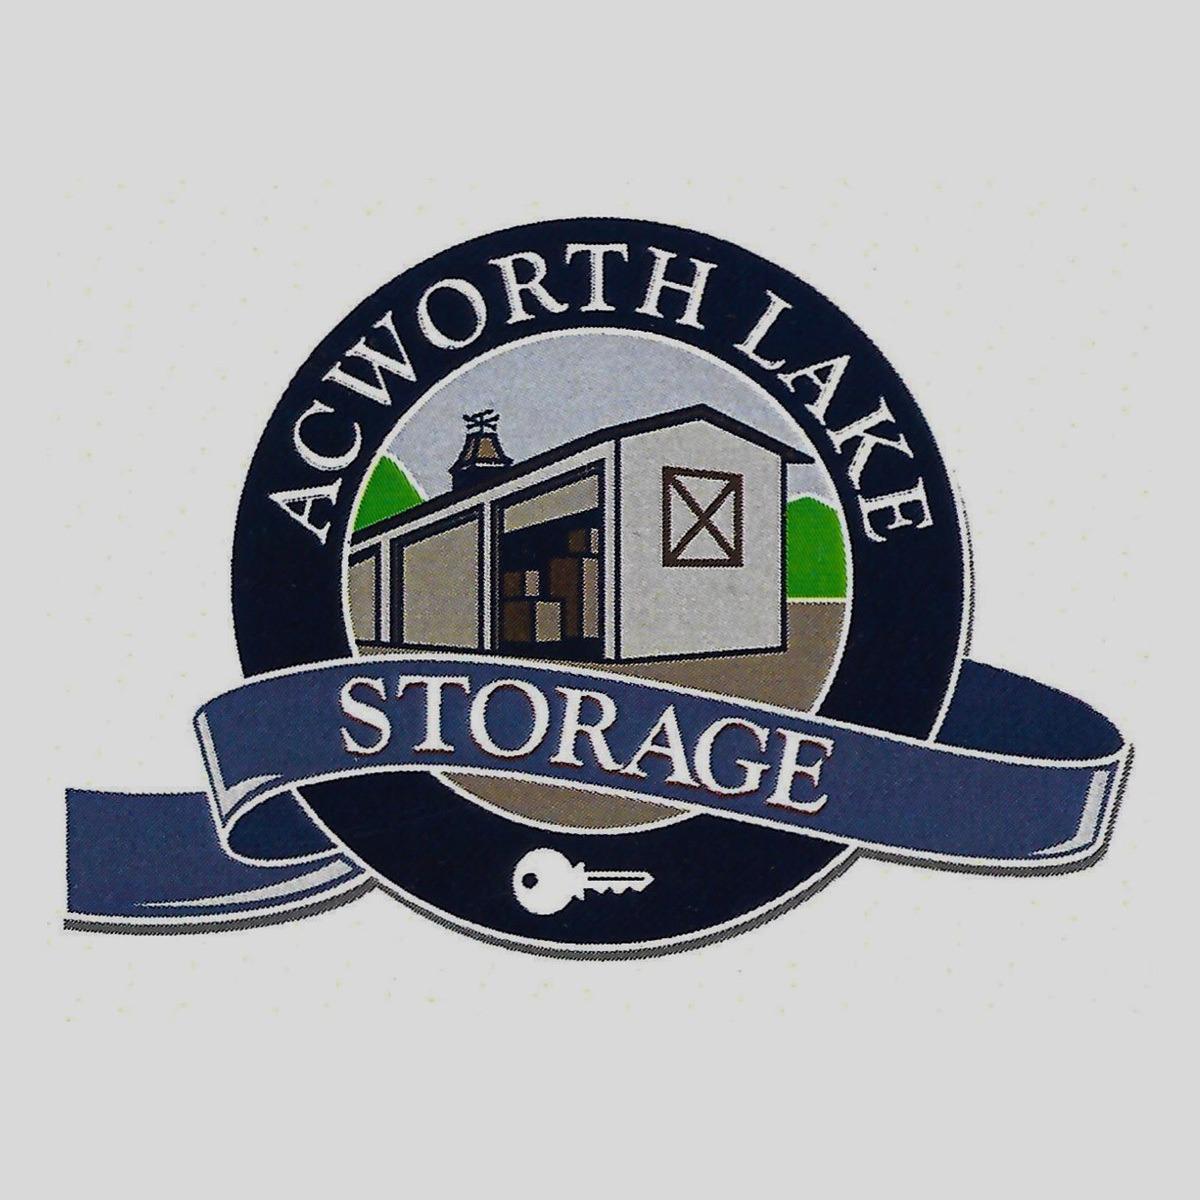 Acworth Lake Storage - Acworth, GA 30101 - (770)983-6770 | ShowMeLocal.com